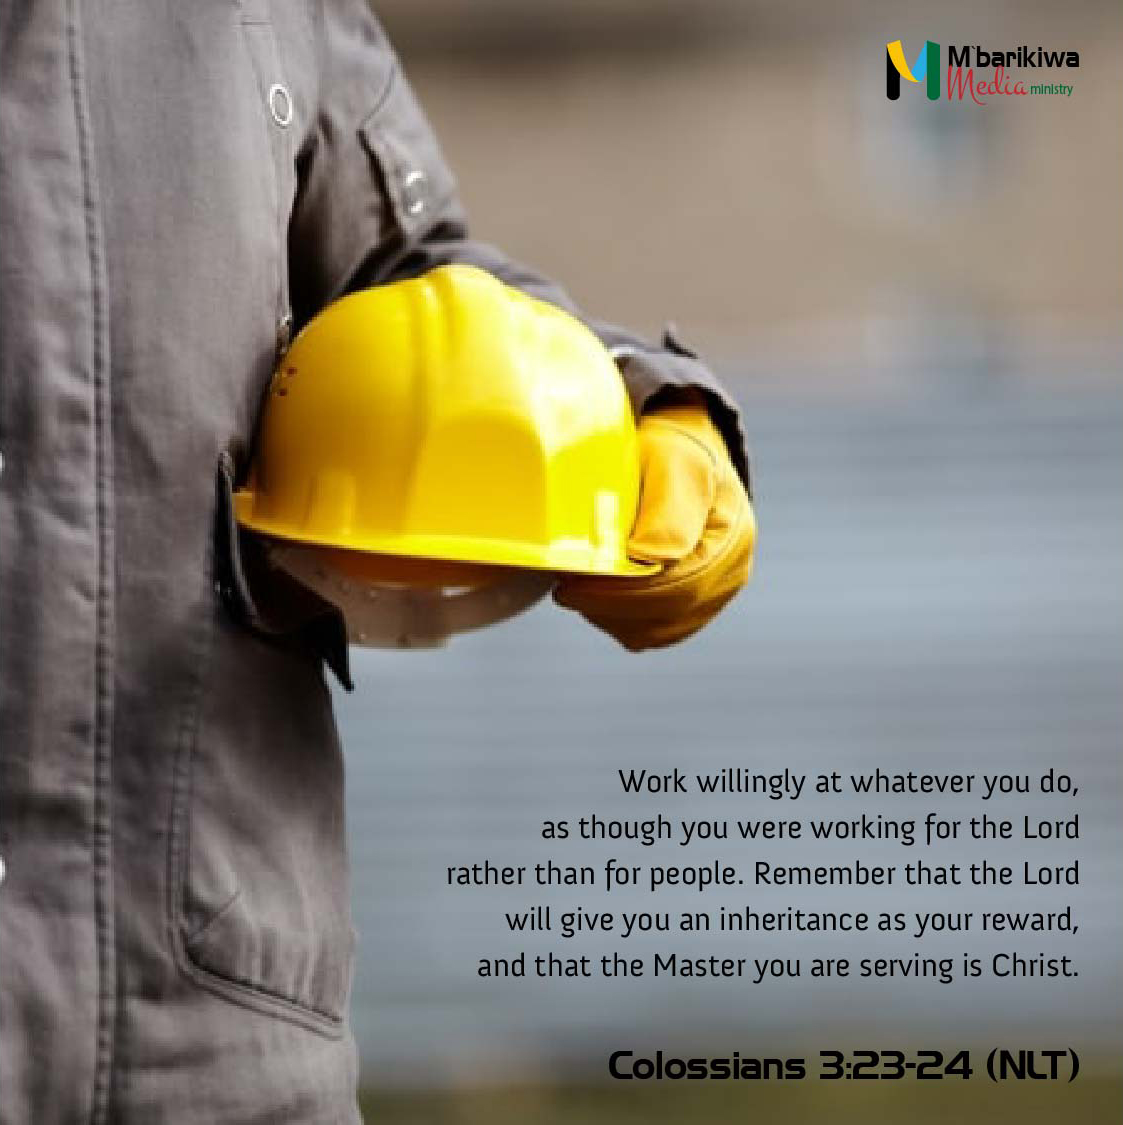 Colossians 3:23-24 (NLT)